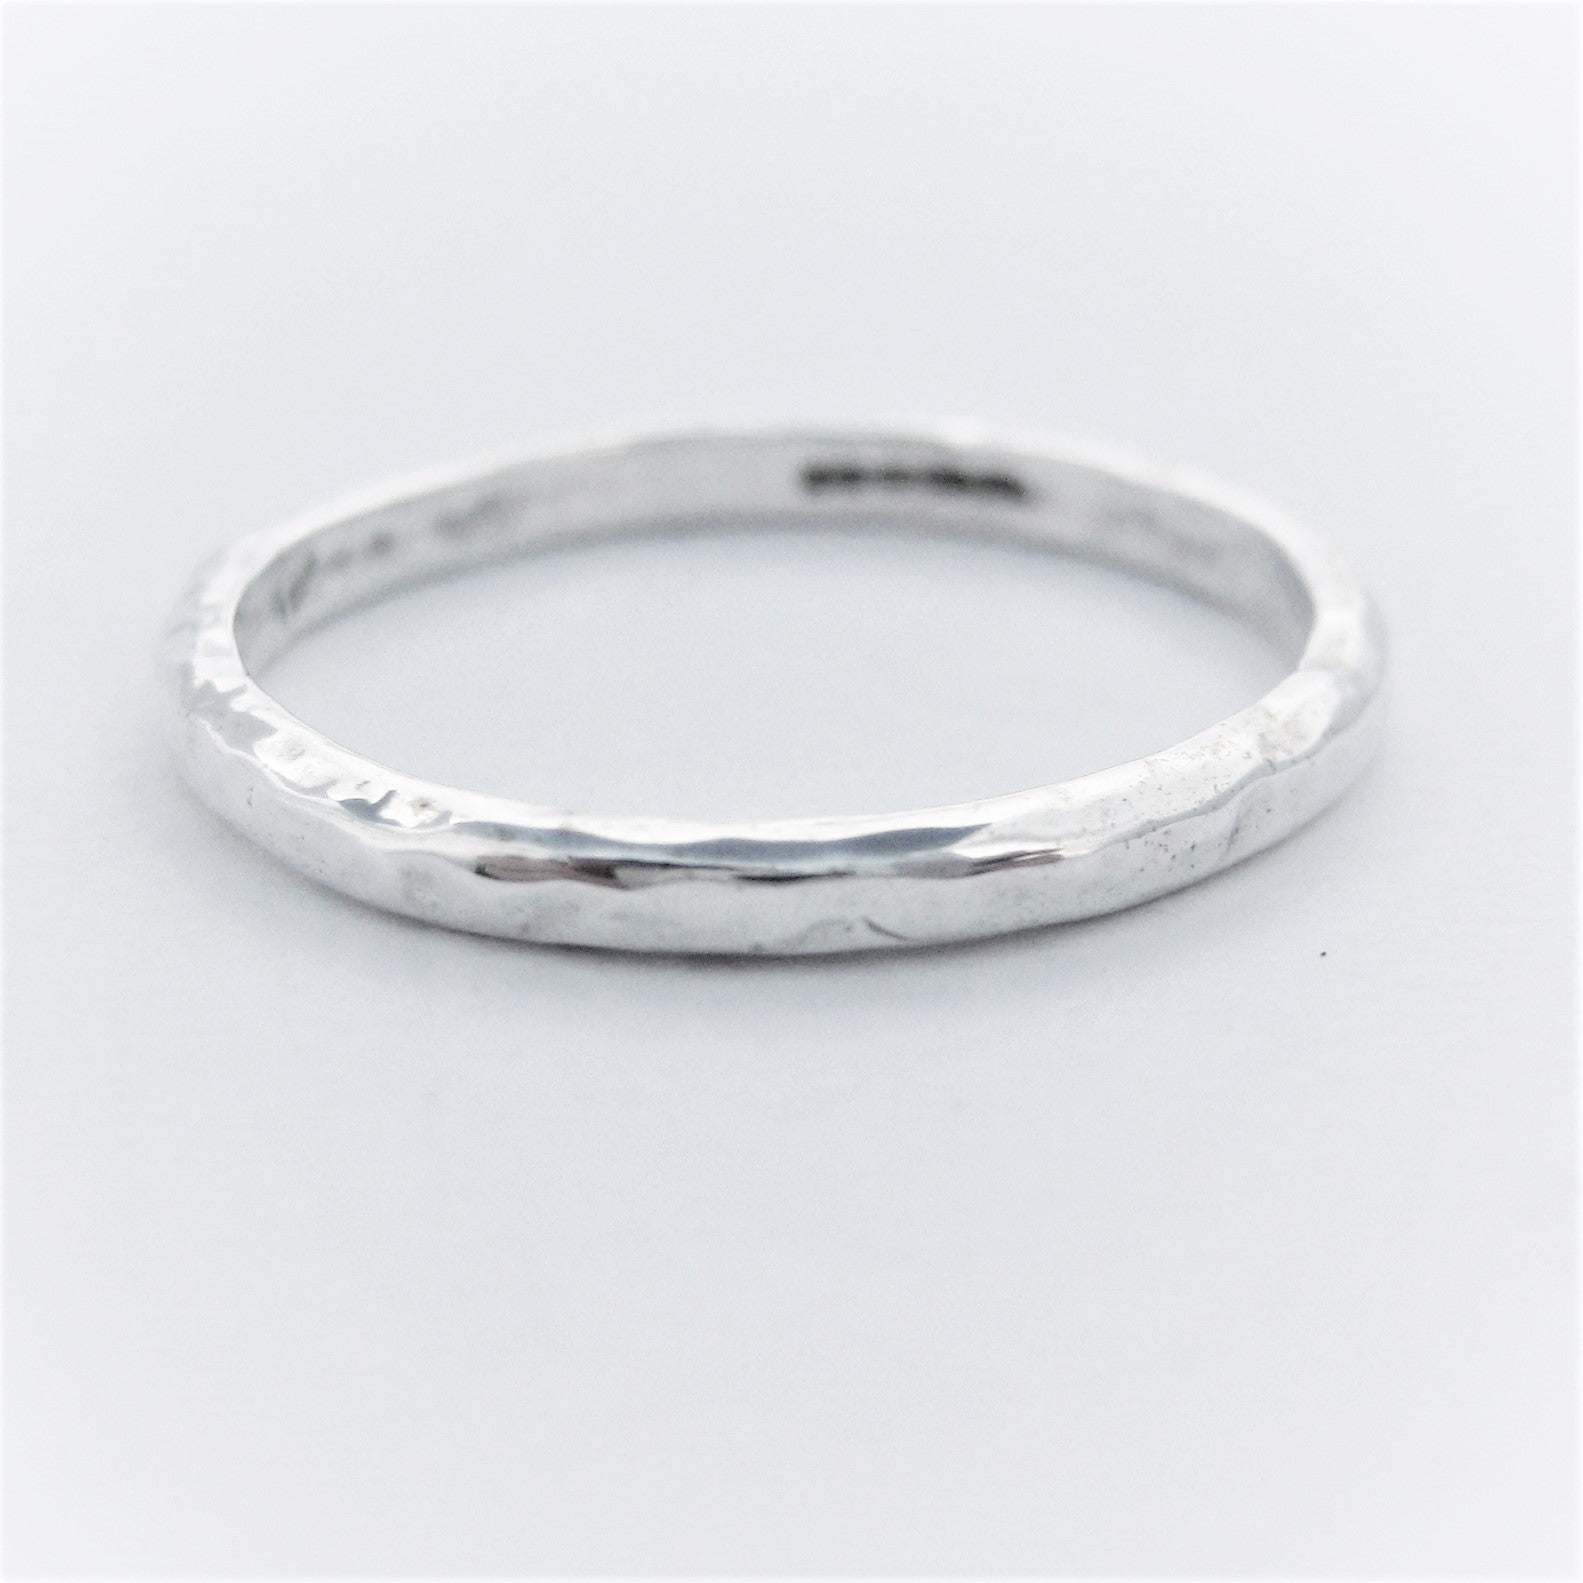 Textured ring 2mm (rnd)